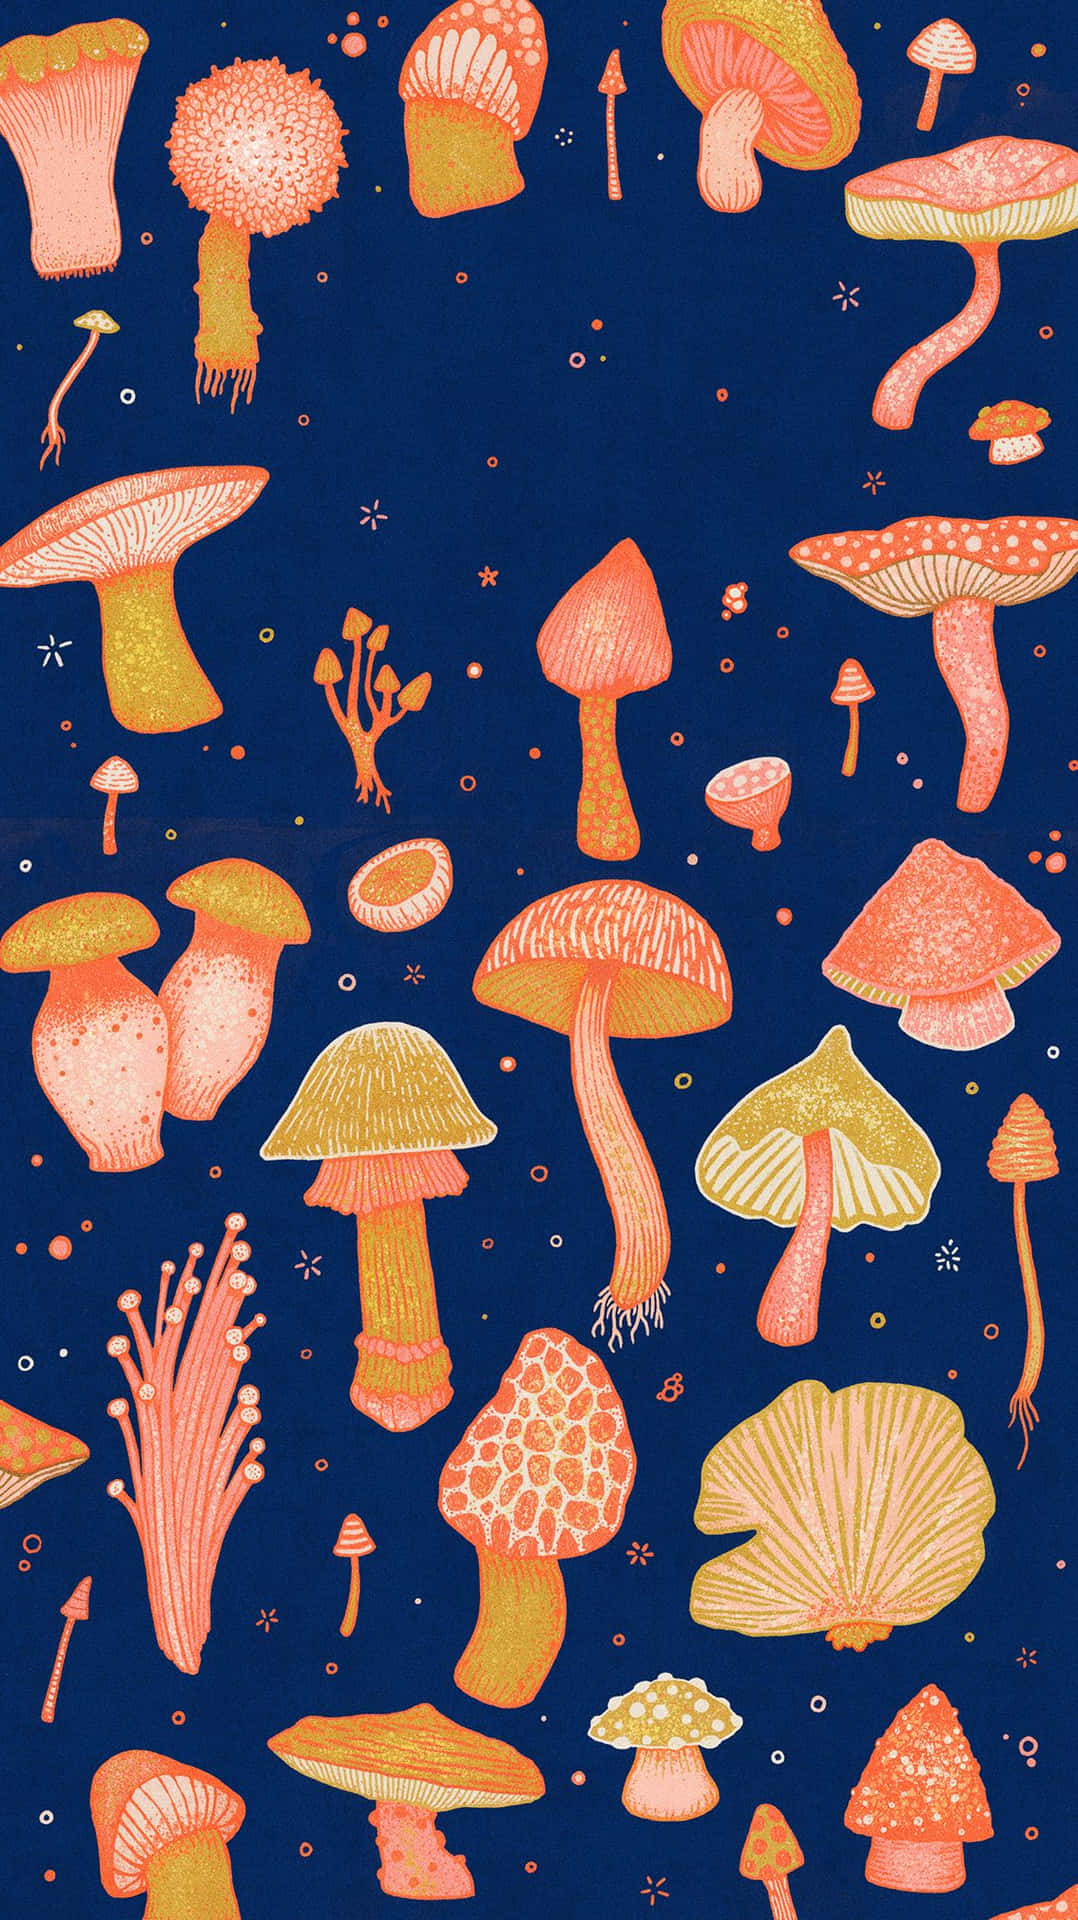 Unlock Nature's Power with the Mushroom Phone Wallpaper